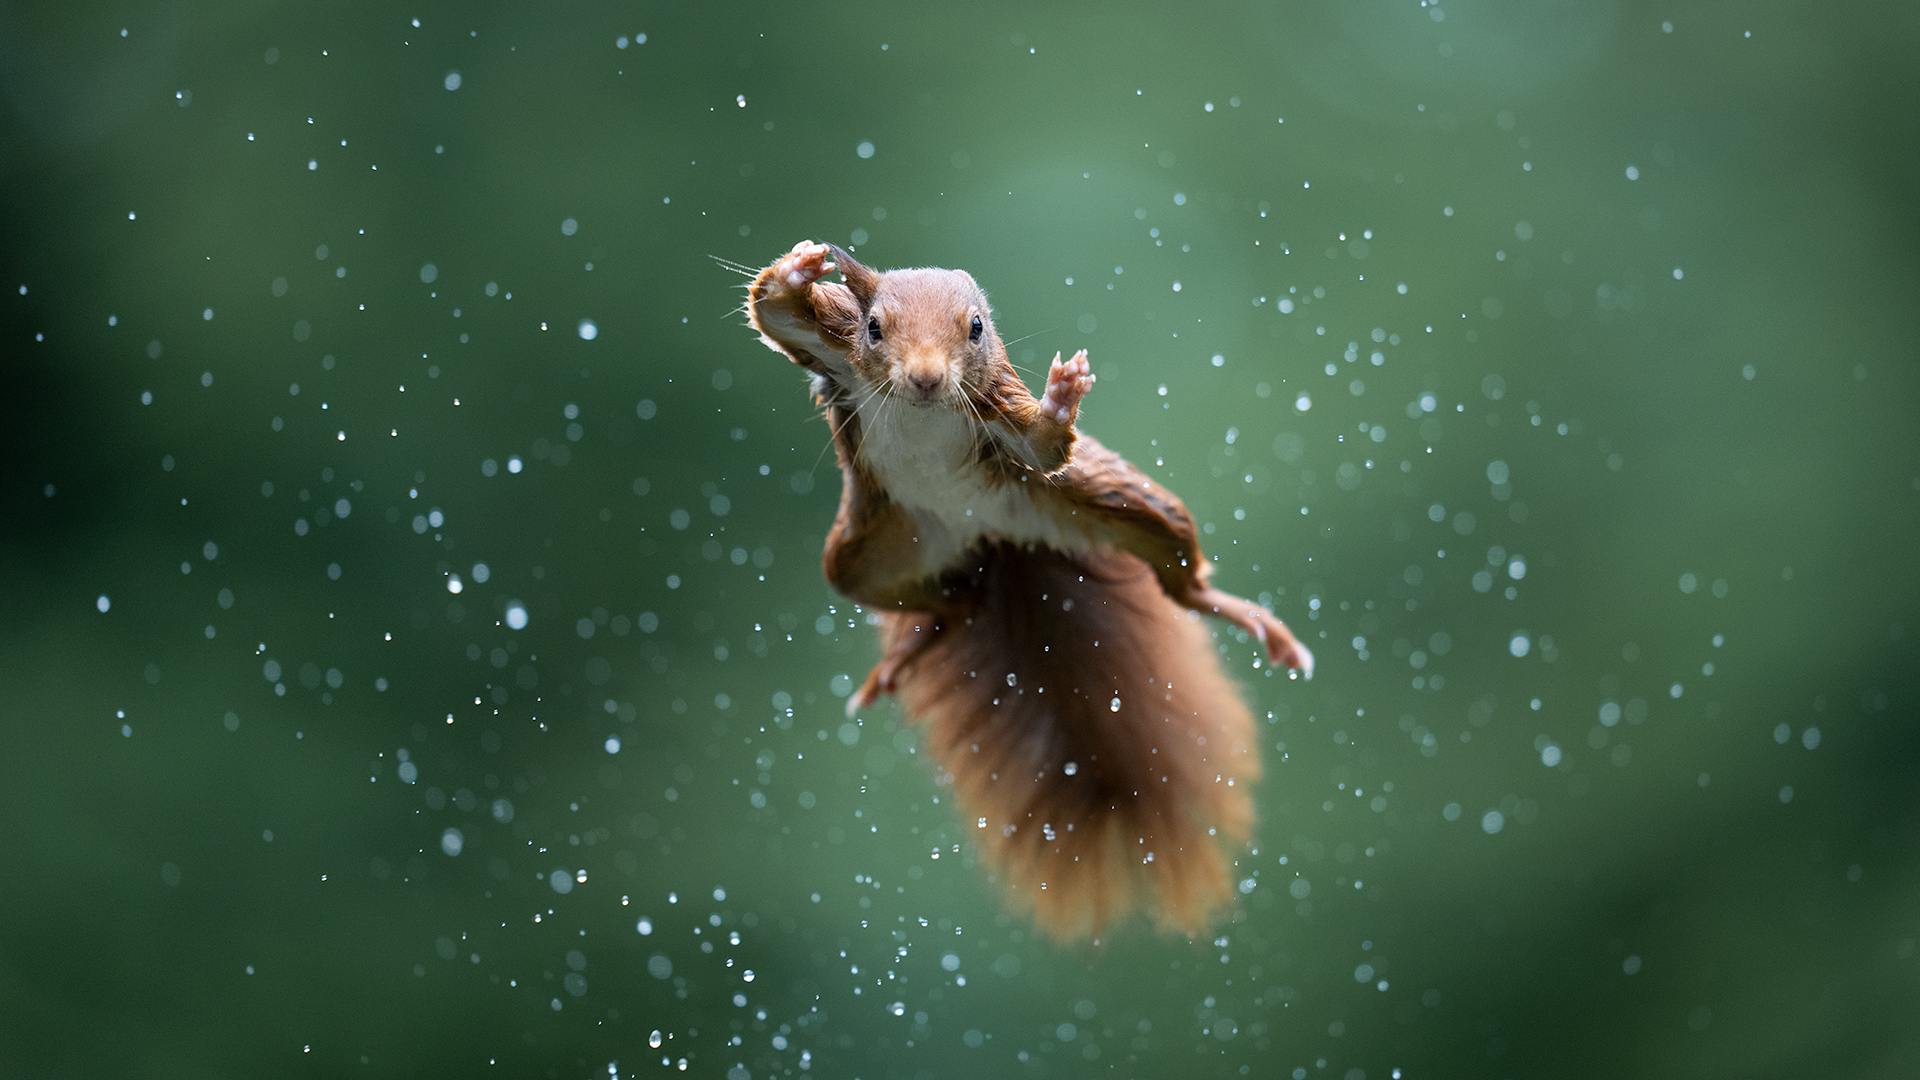 Cool squirrel in flight